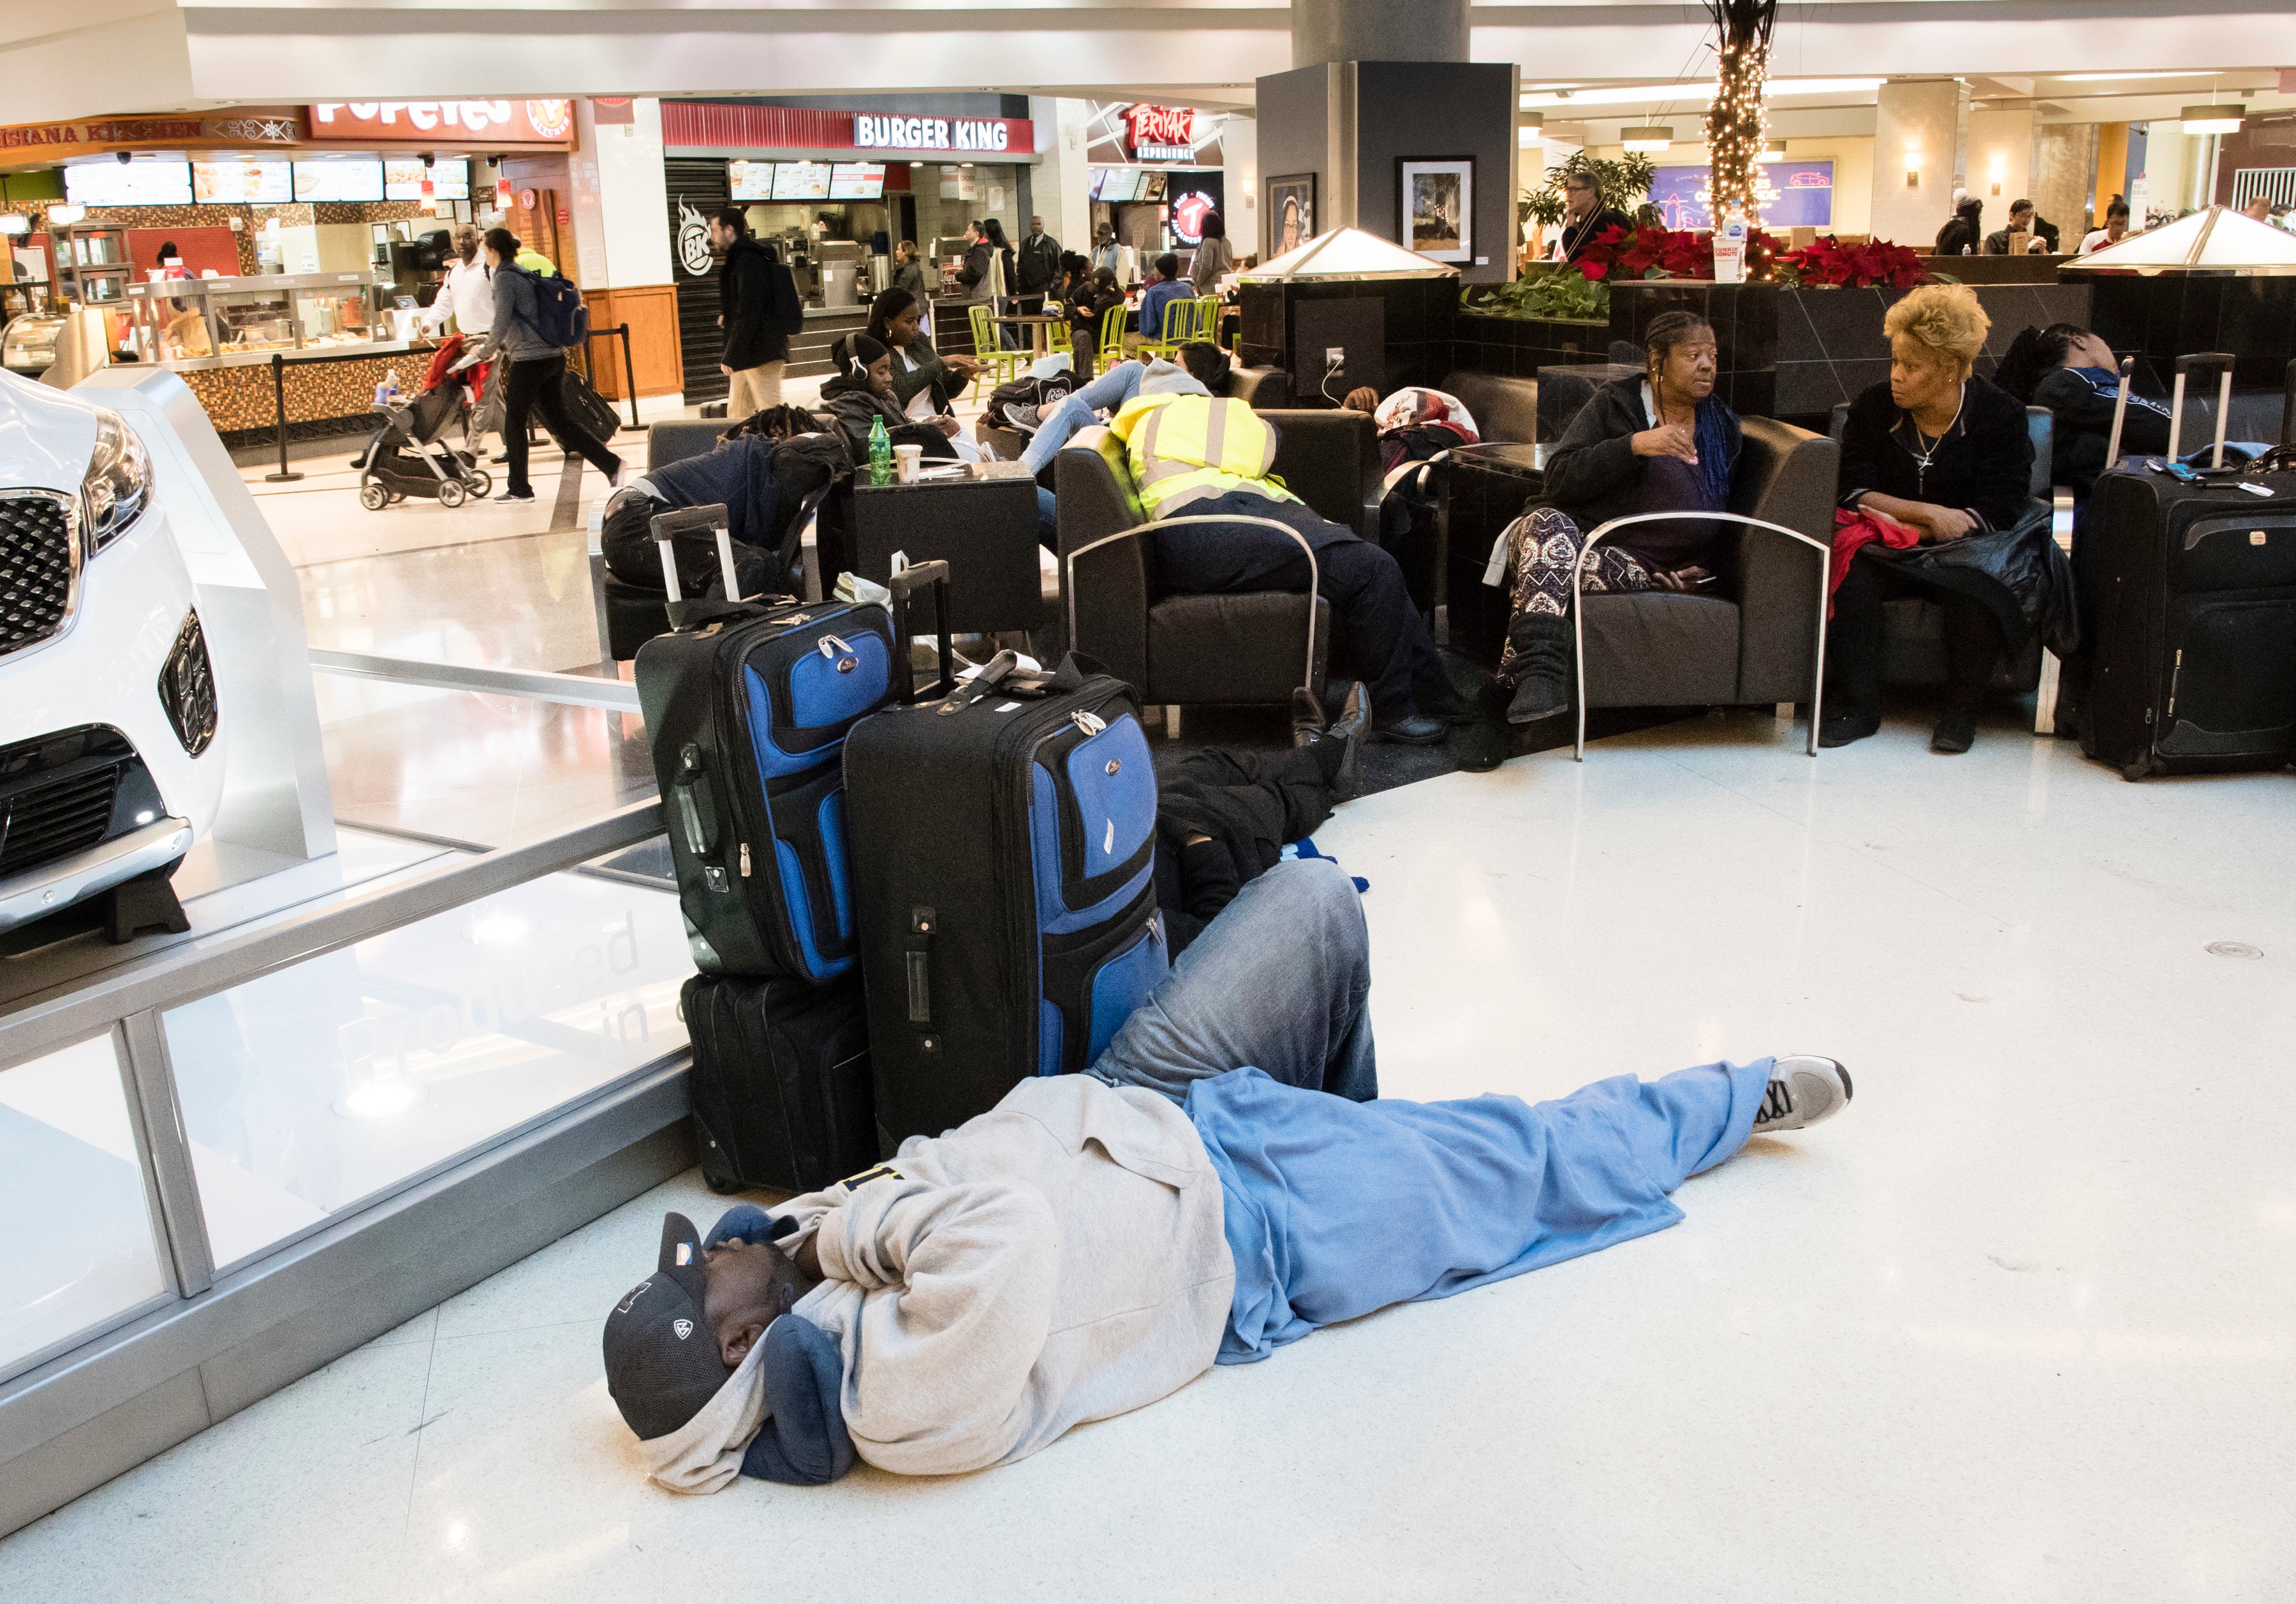 A man sleeps on the floor in Atlanta’s airport